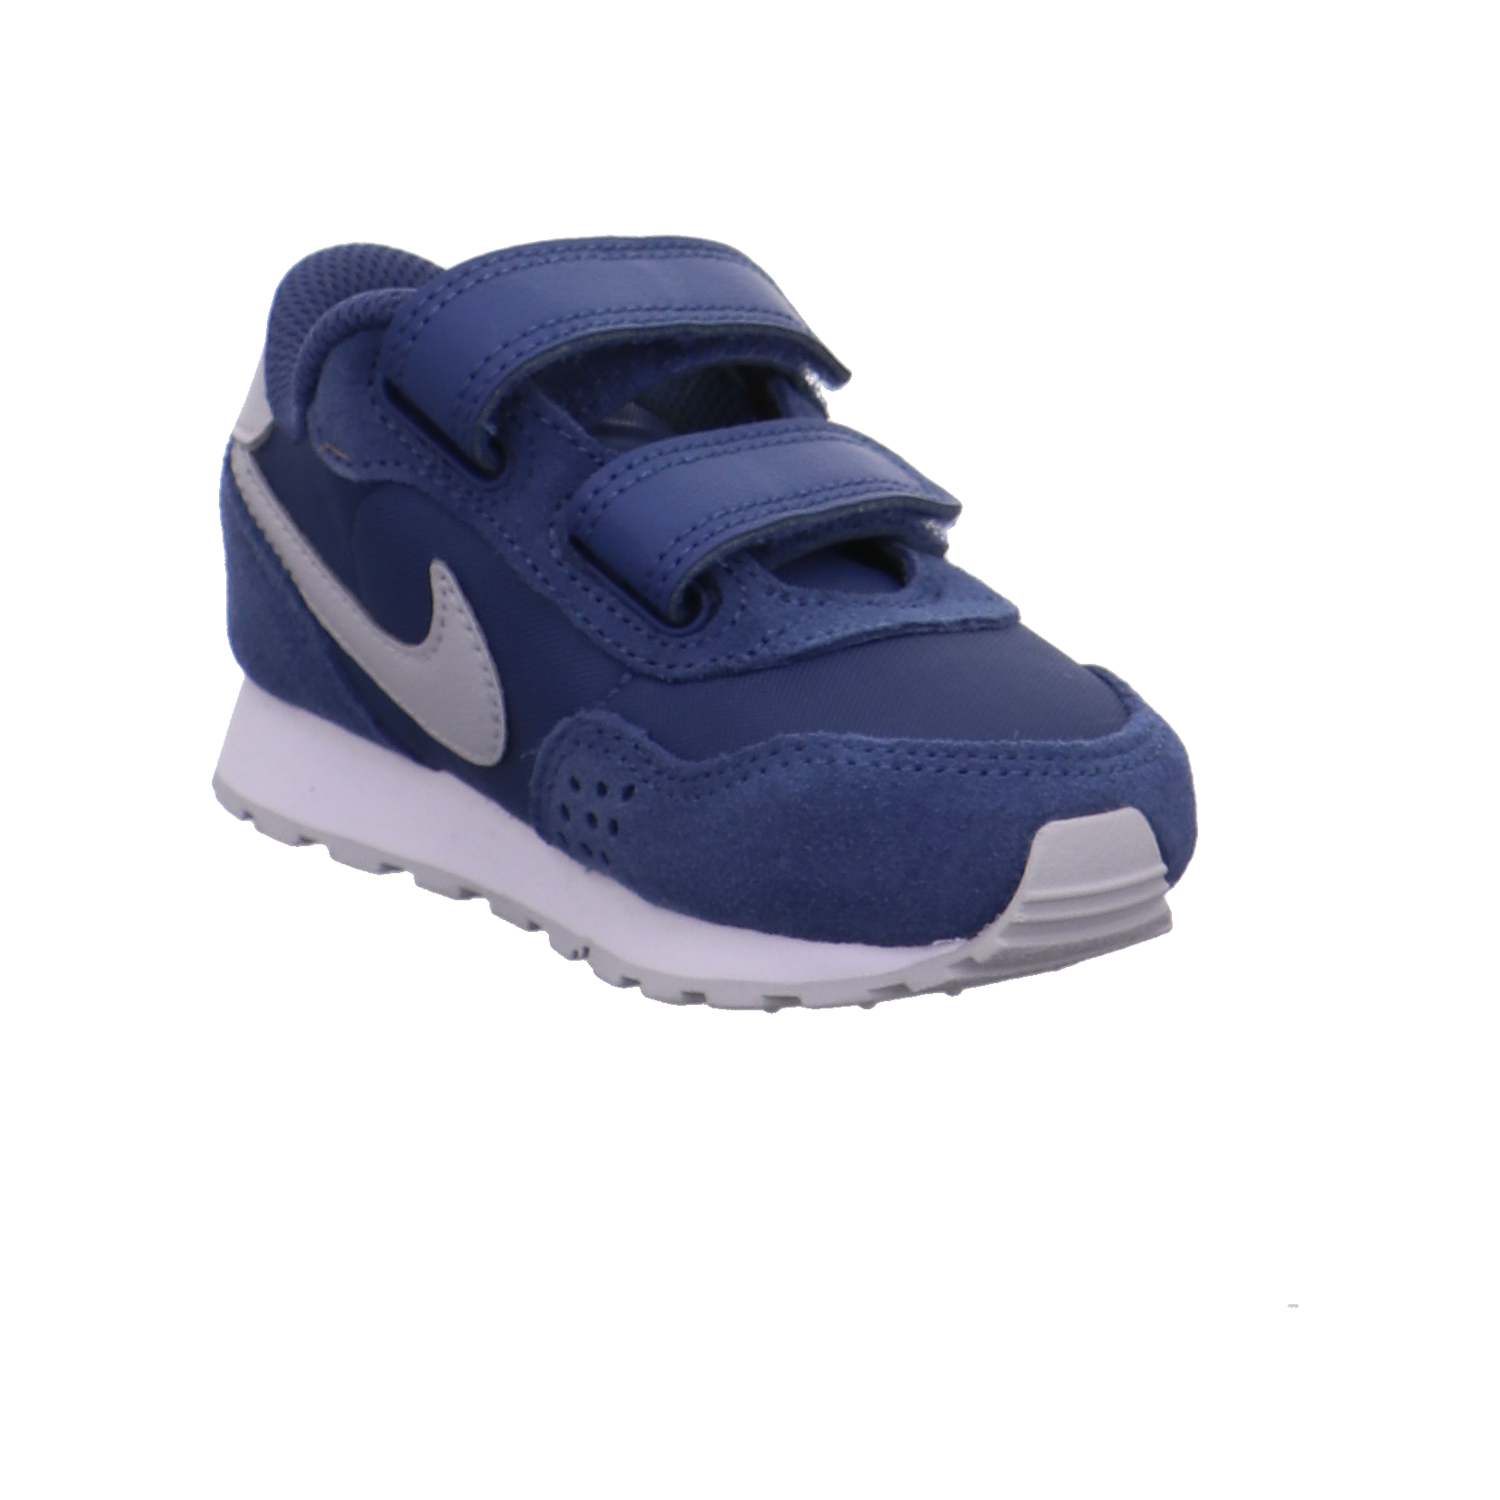 Nike Halbschuhe blau kombi Bild7